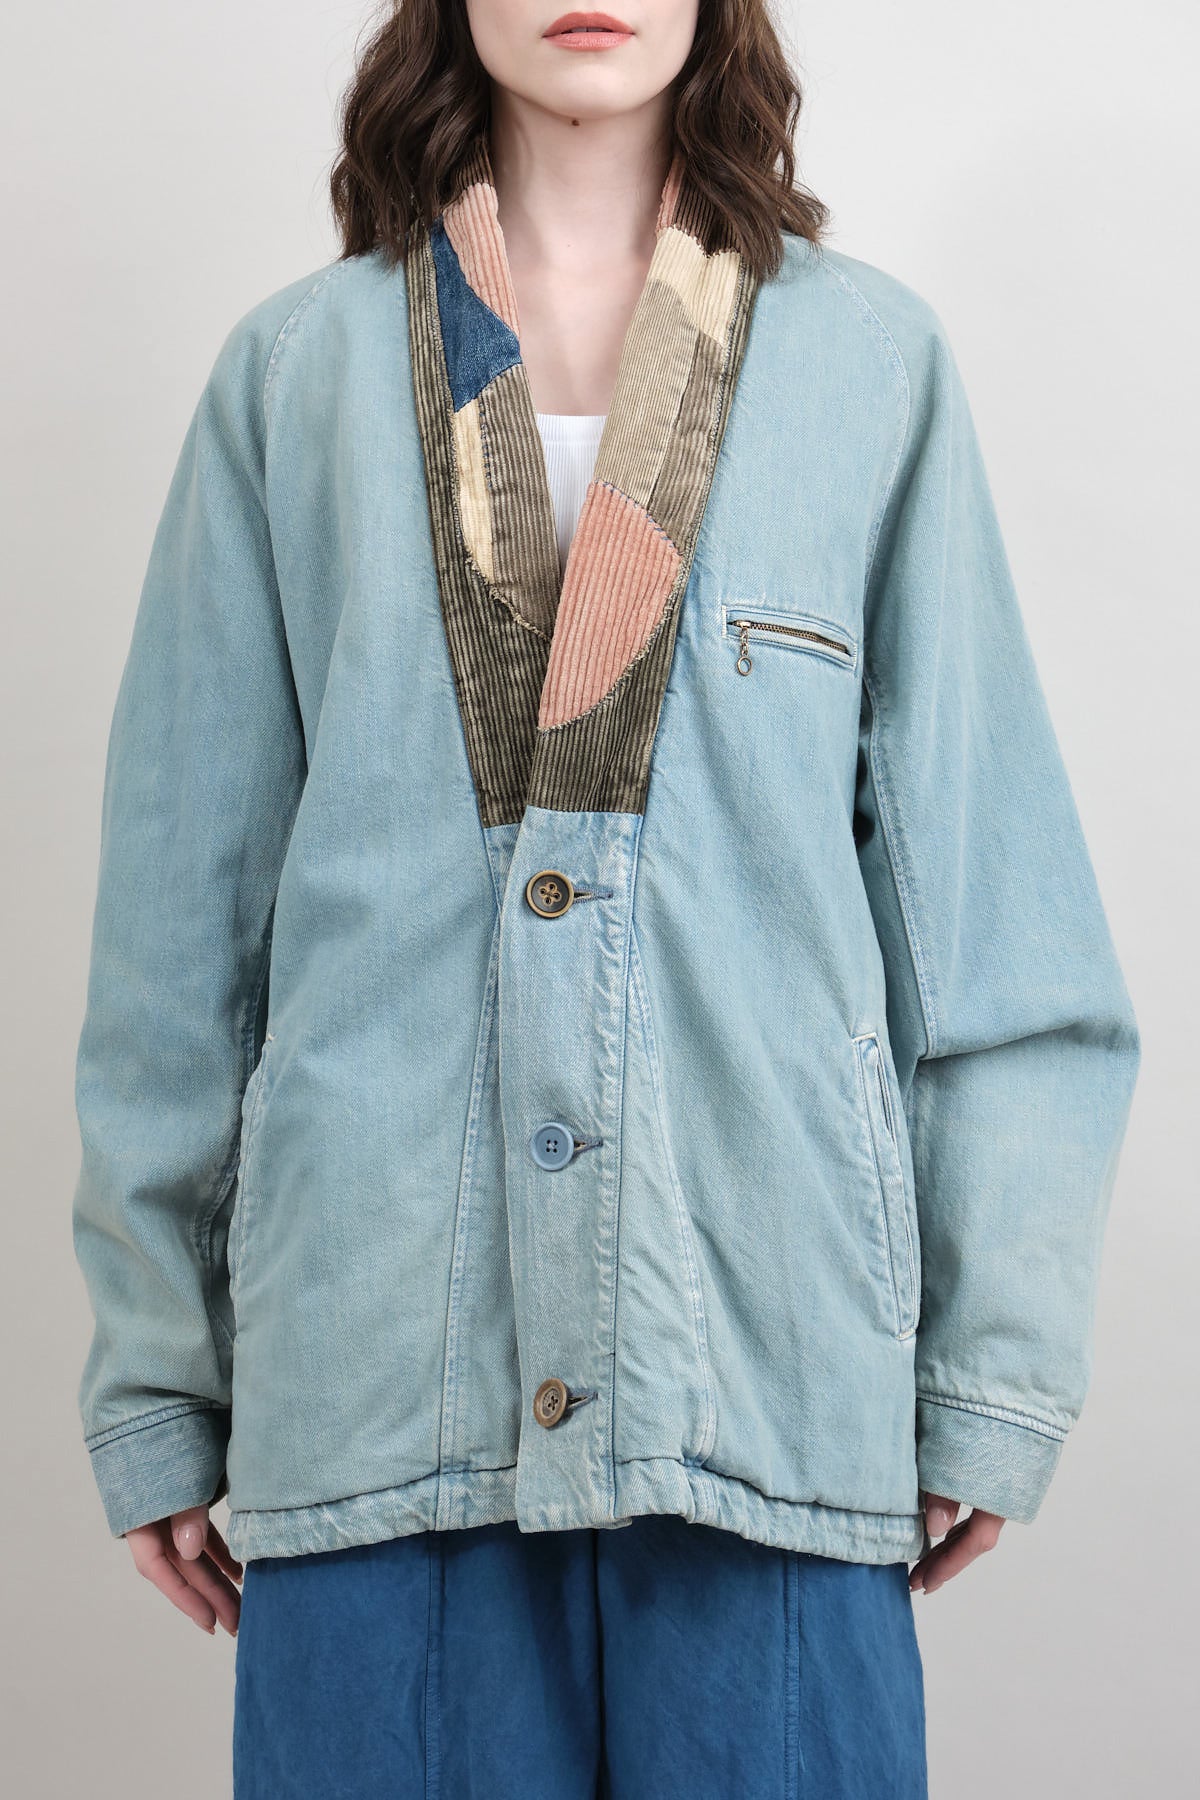 Kapital Denim Dotera Jacket with Noragi Corduroy patchwork collar and mismatched buttons